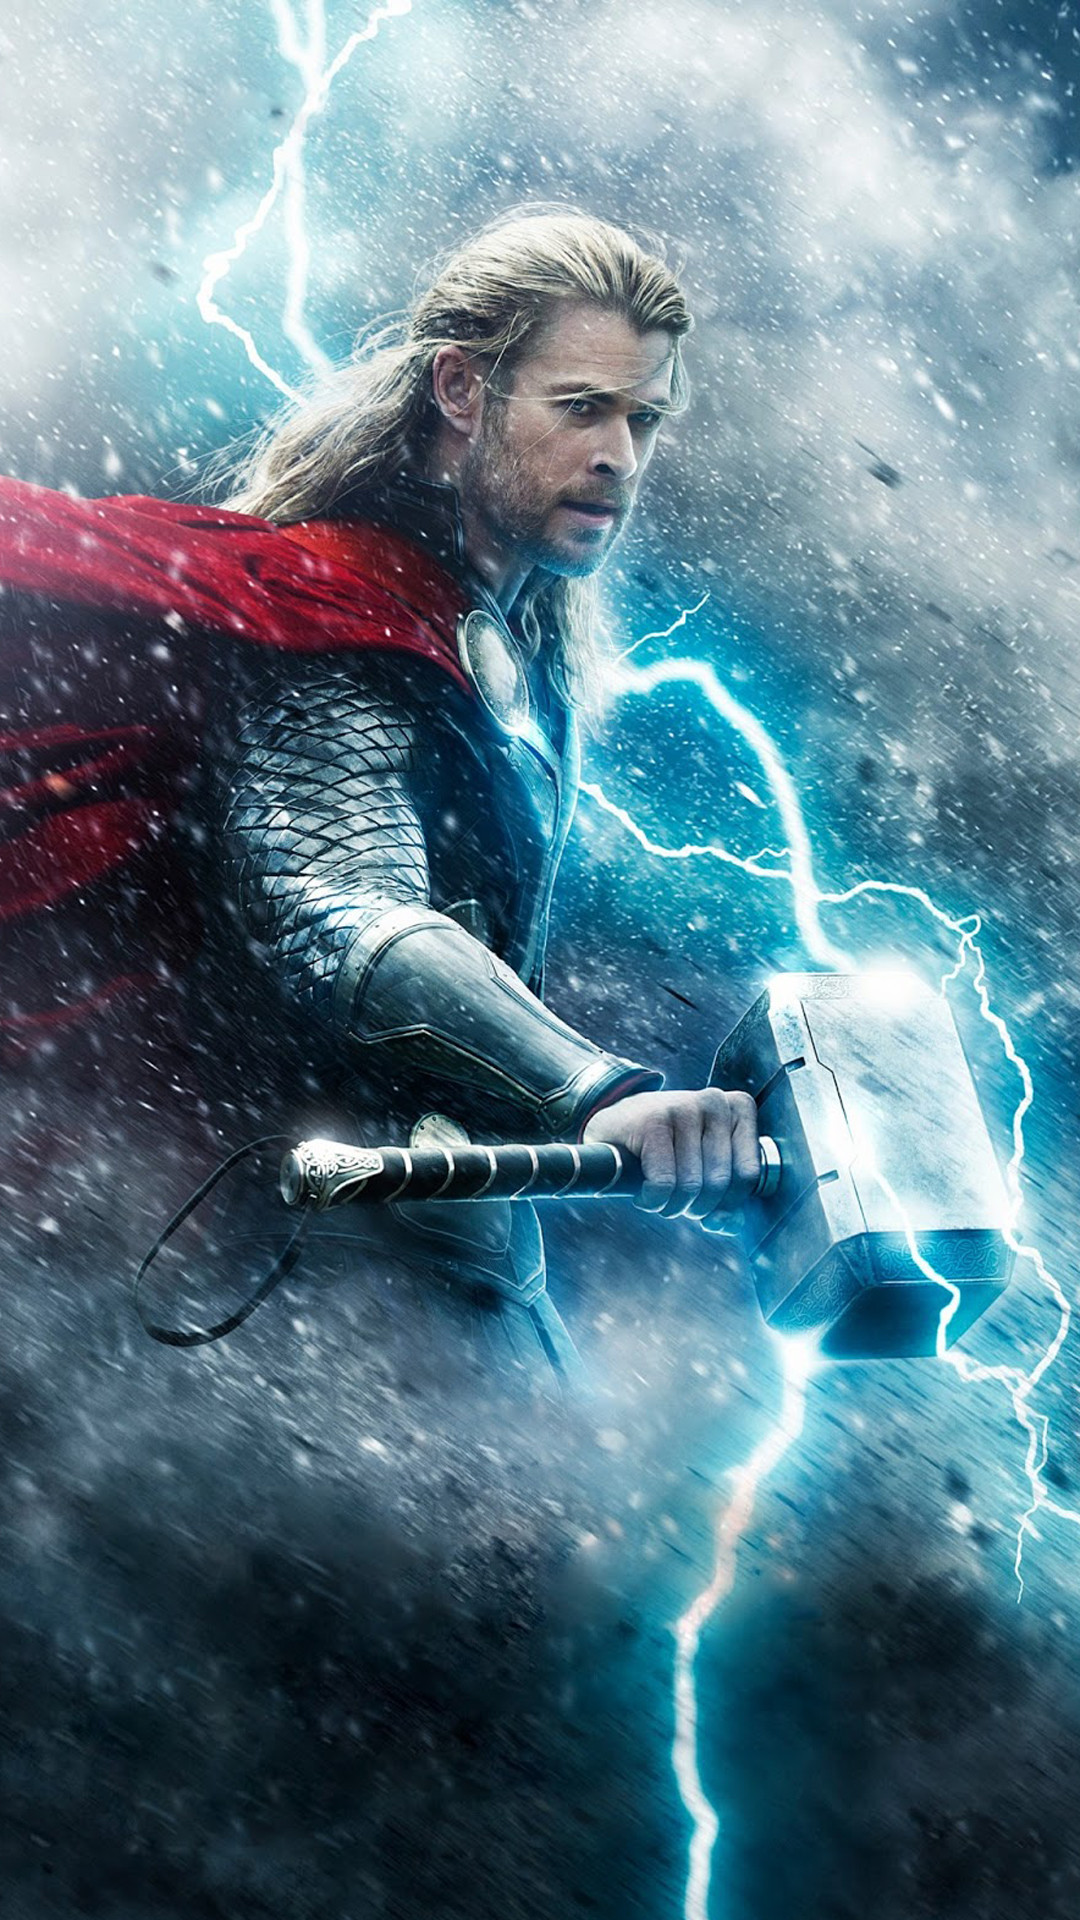 For anyone who wants a cool wallpaper  Superhero  Marvel thor Thor  wallpaper Avengers wallpaper